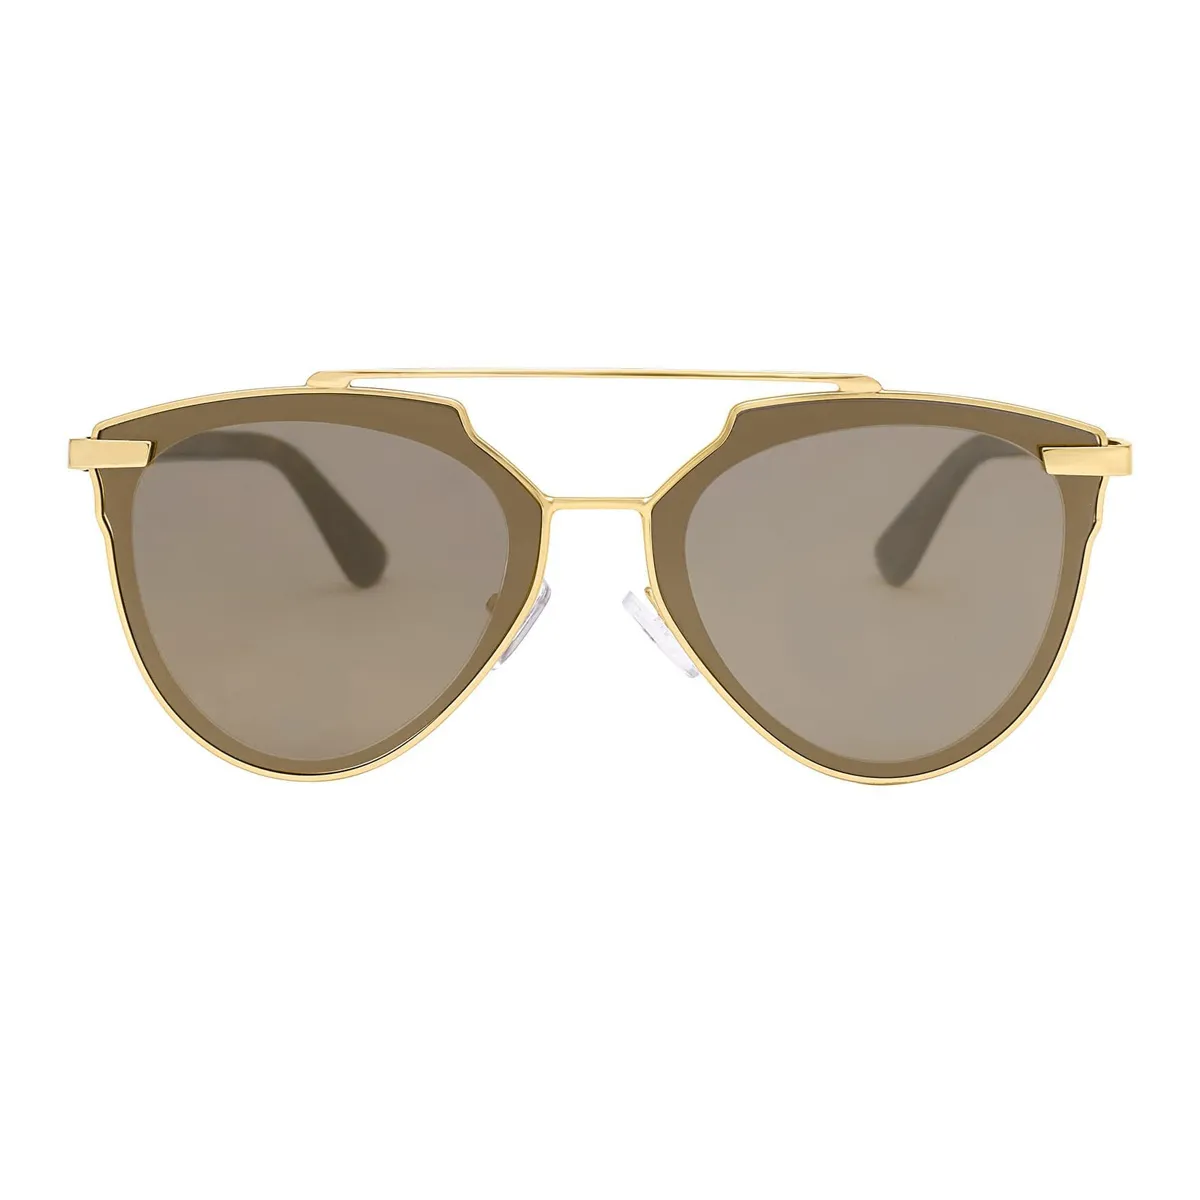 Fashion Aviator Gold  Sunglasses for Women & Men